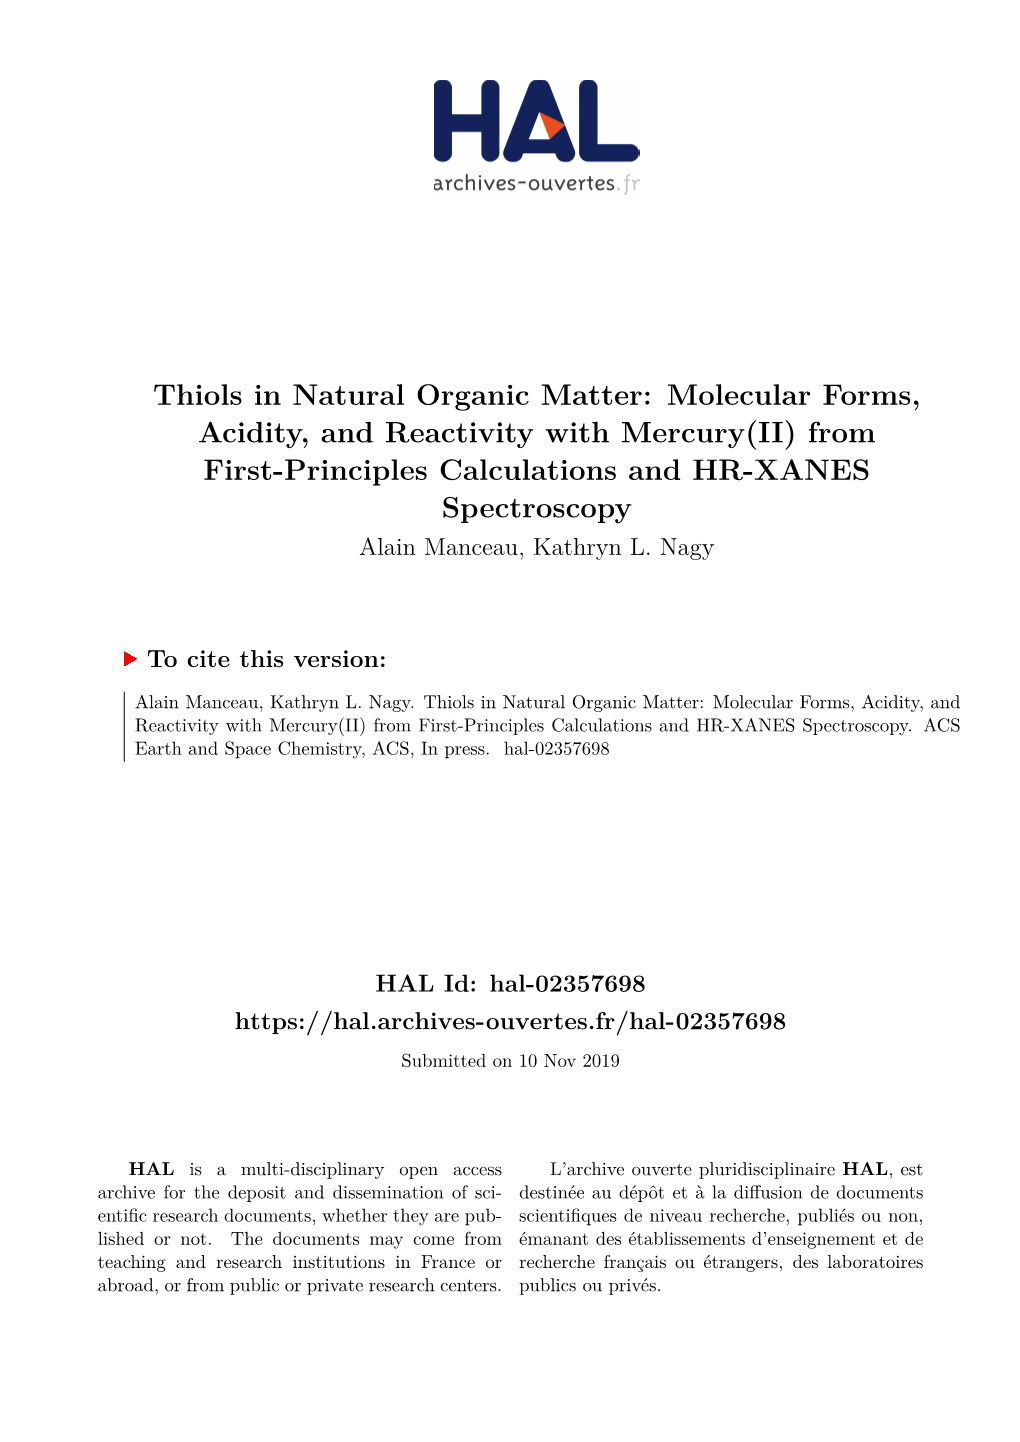 Thiols in Natural Organic Matter